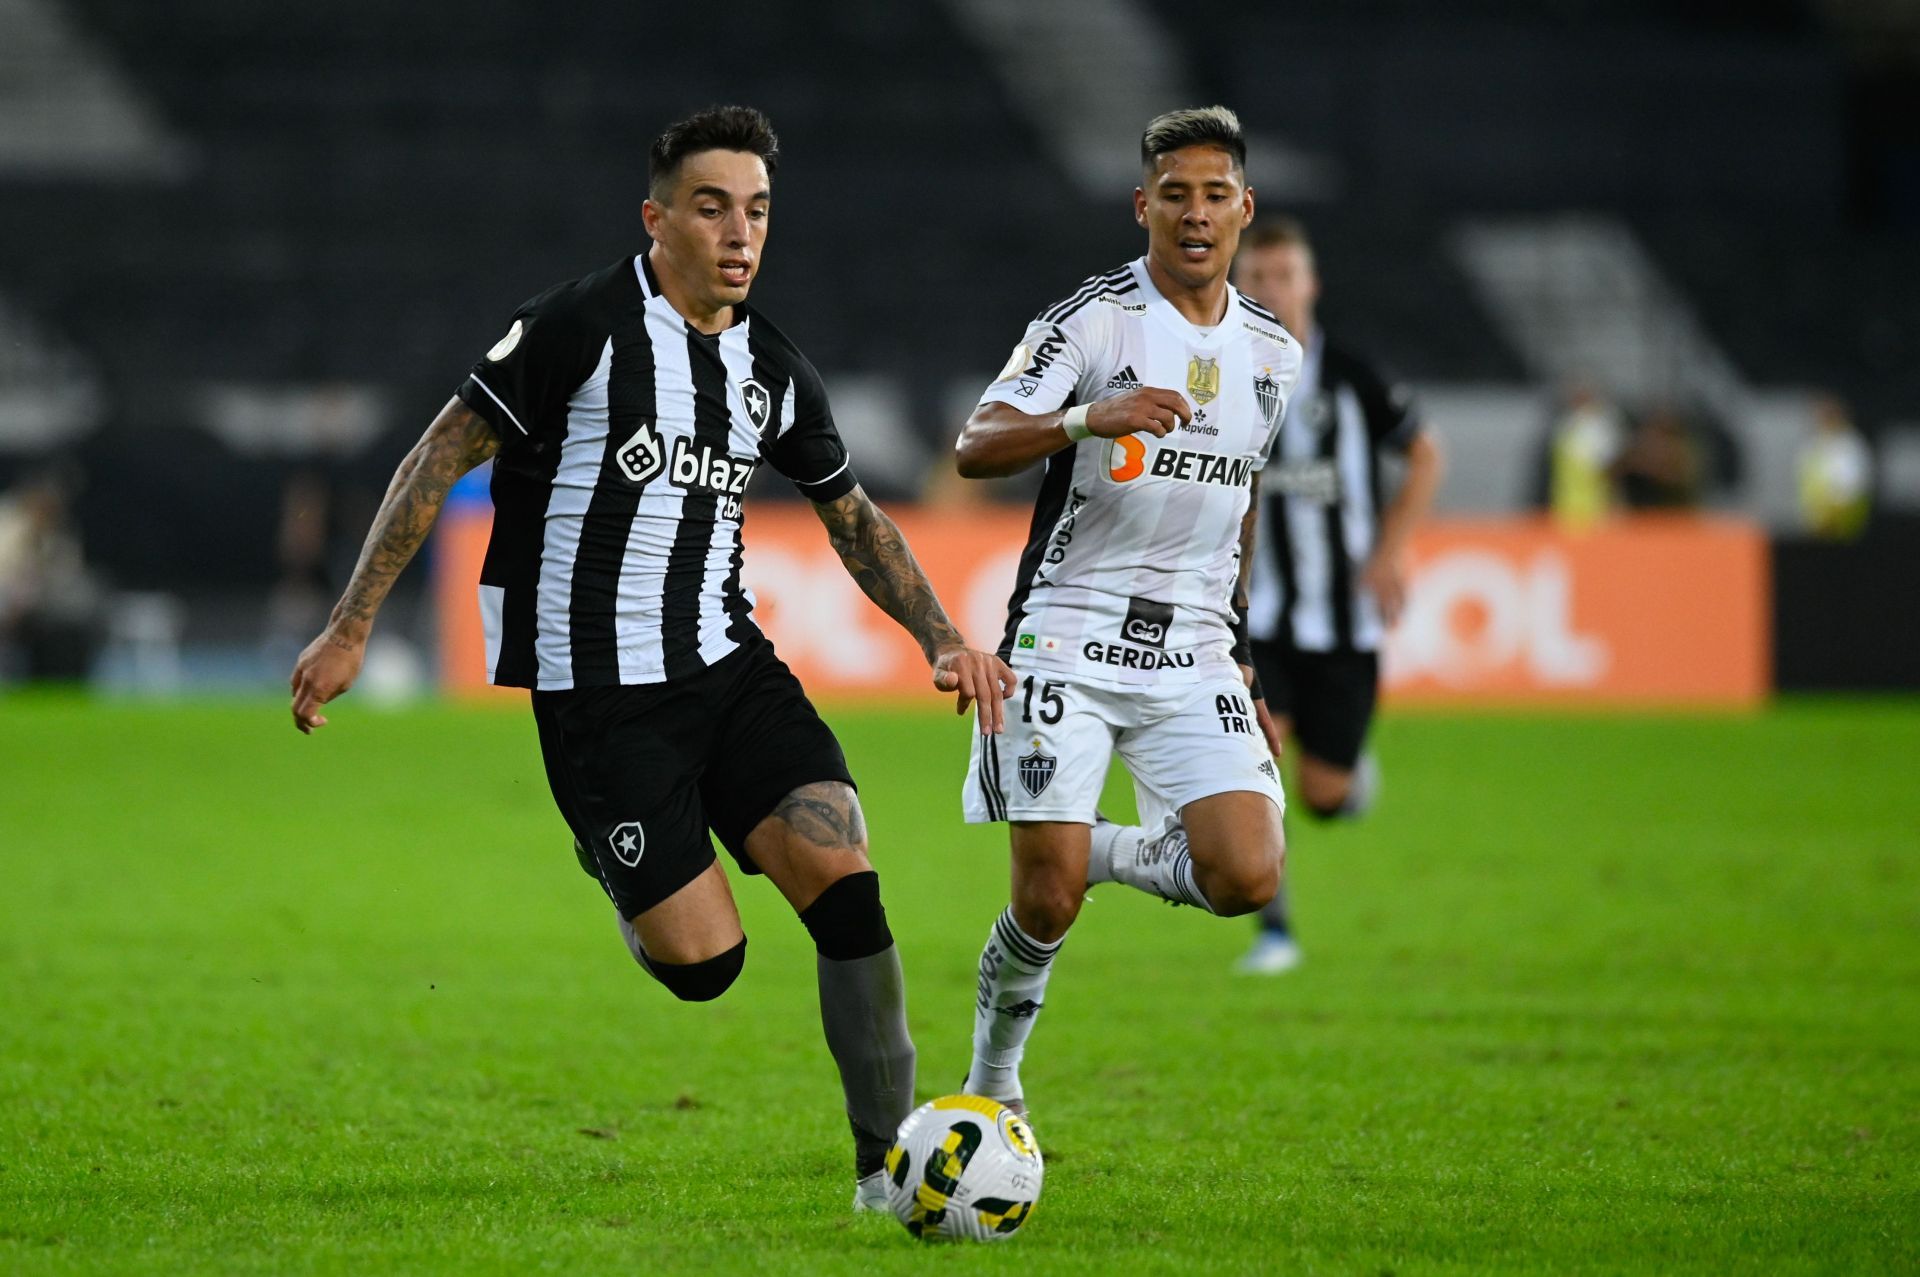 Botafogo will host Athletico Paranaense on Saturday - Brasileirao 2022